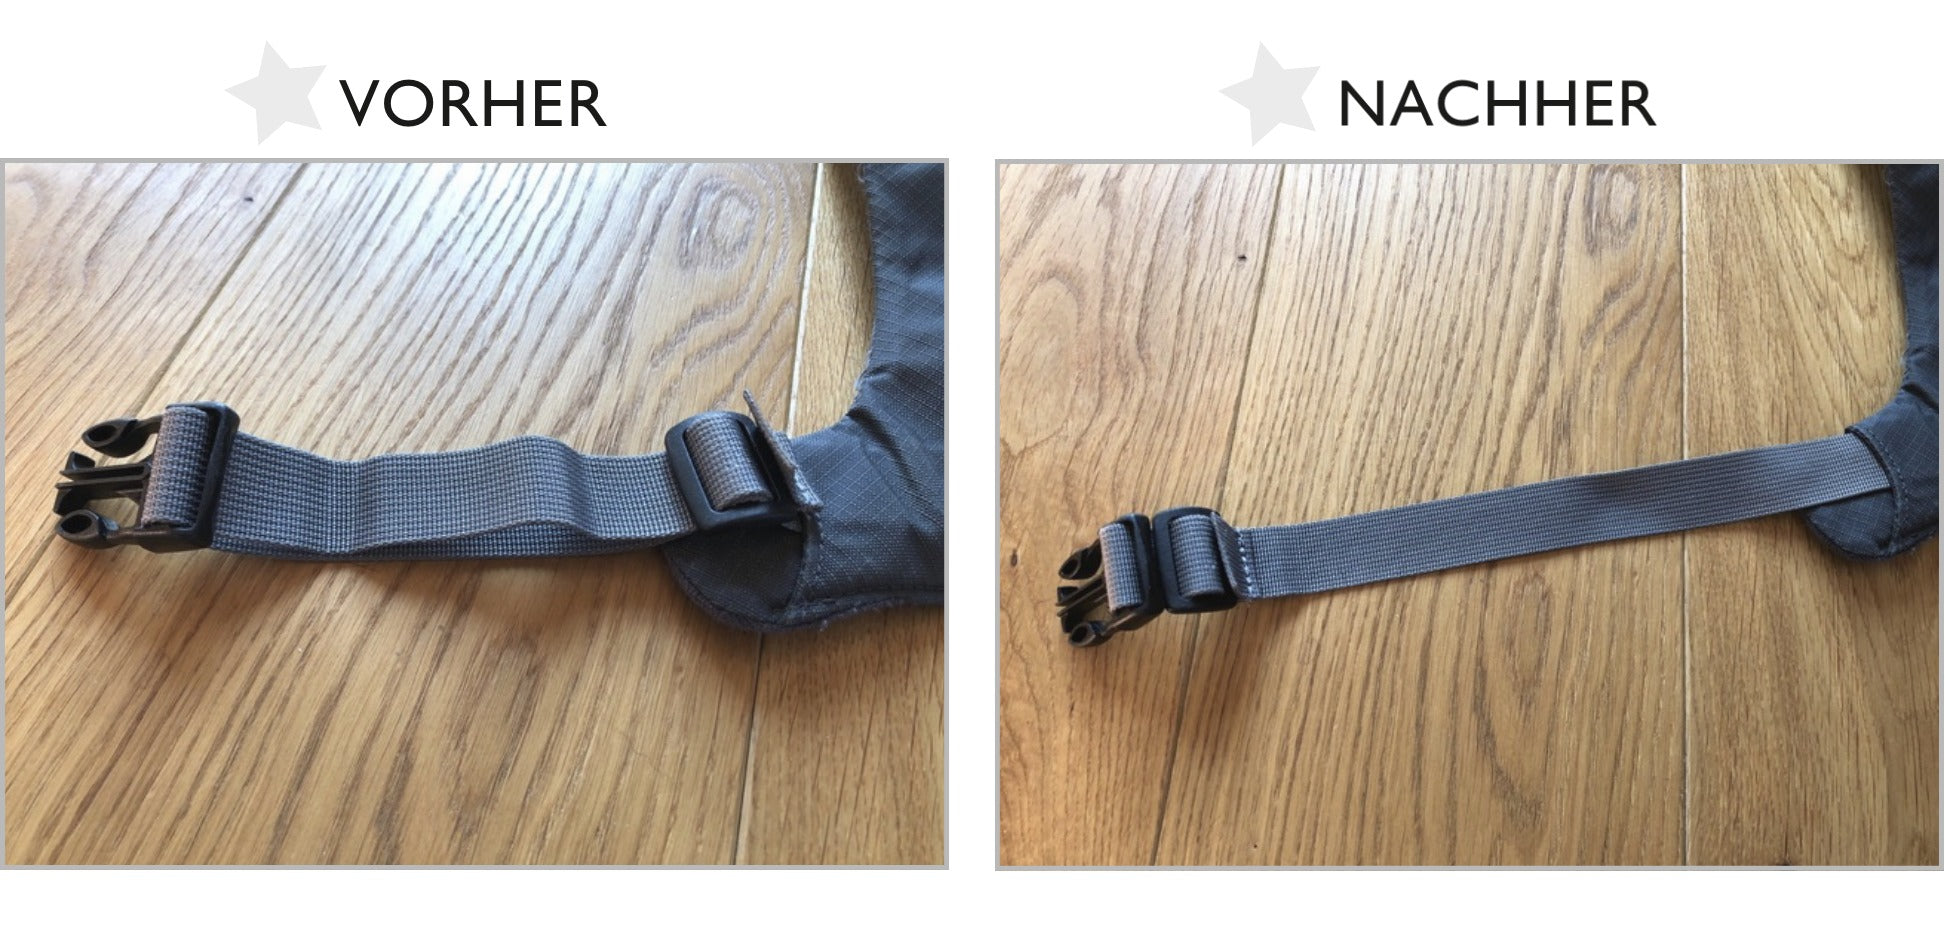 How to adjust the Ruffwear harness